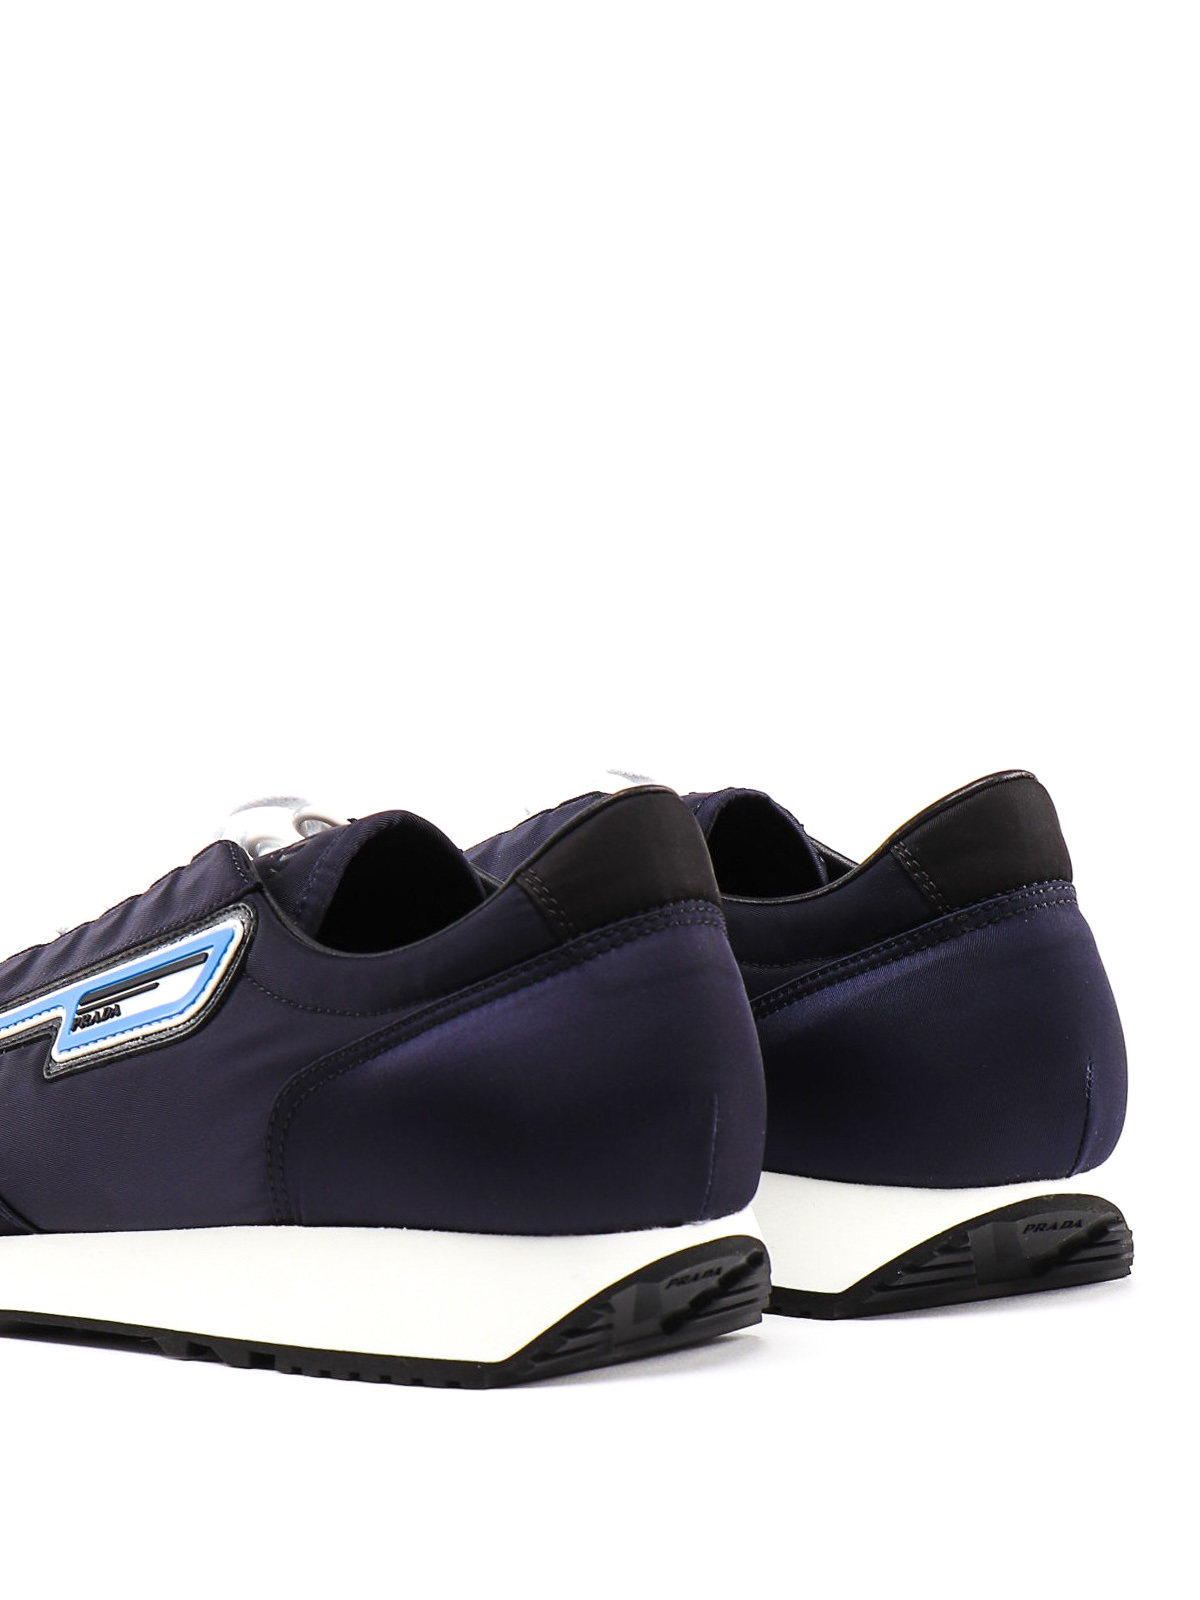 Trainers Prada - Milano 70 blue sneakers - 2EG286W08C6D | iKRIX.com